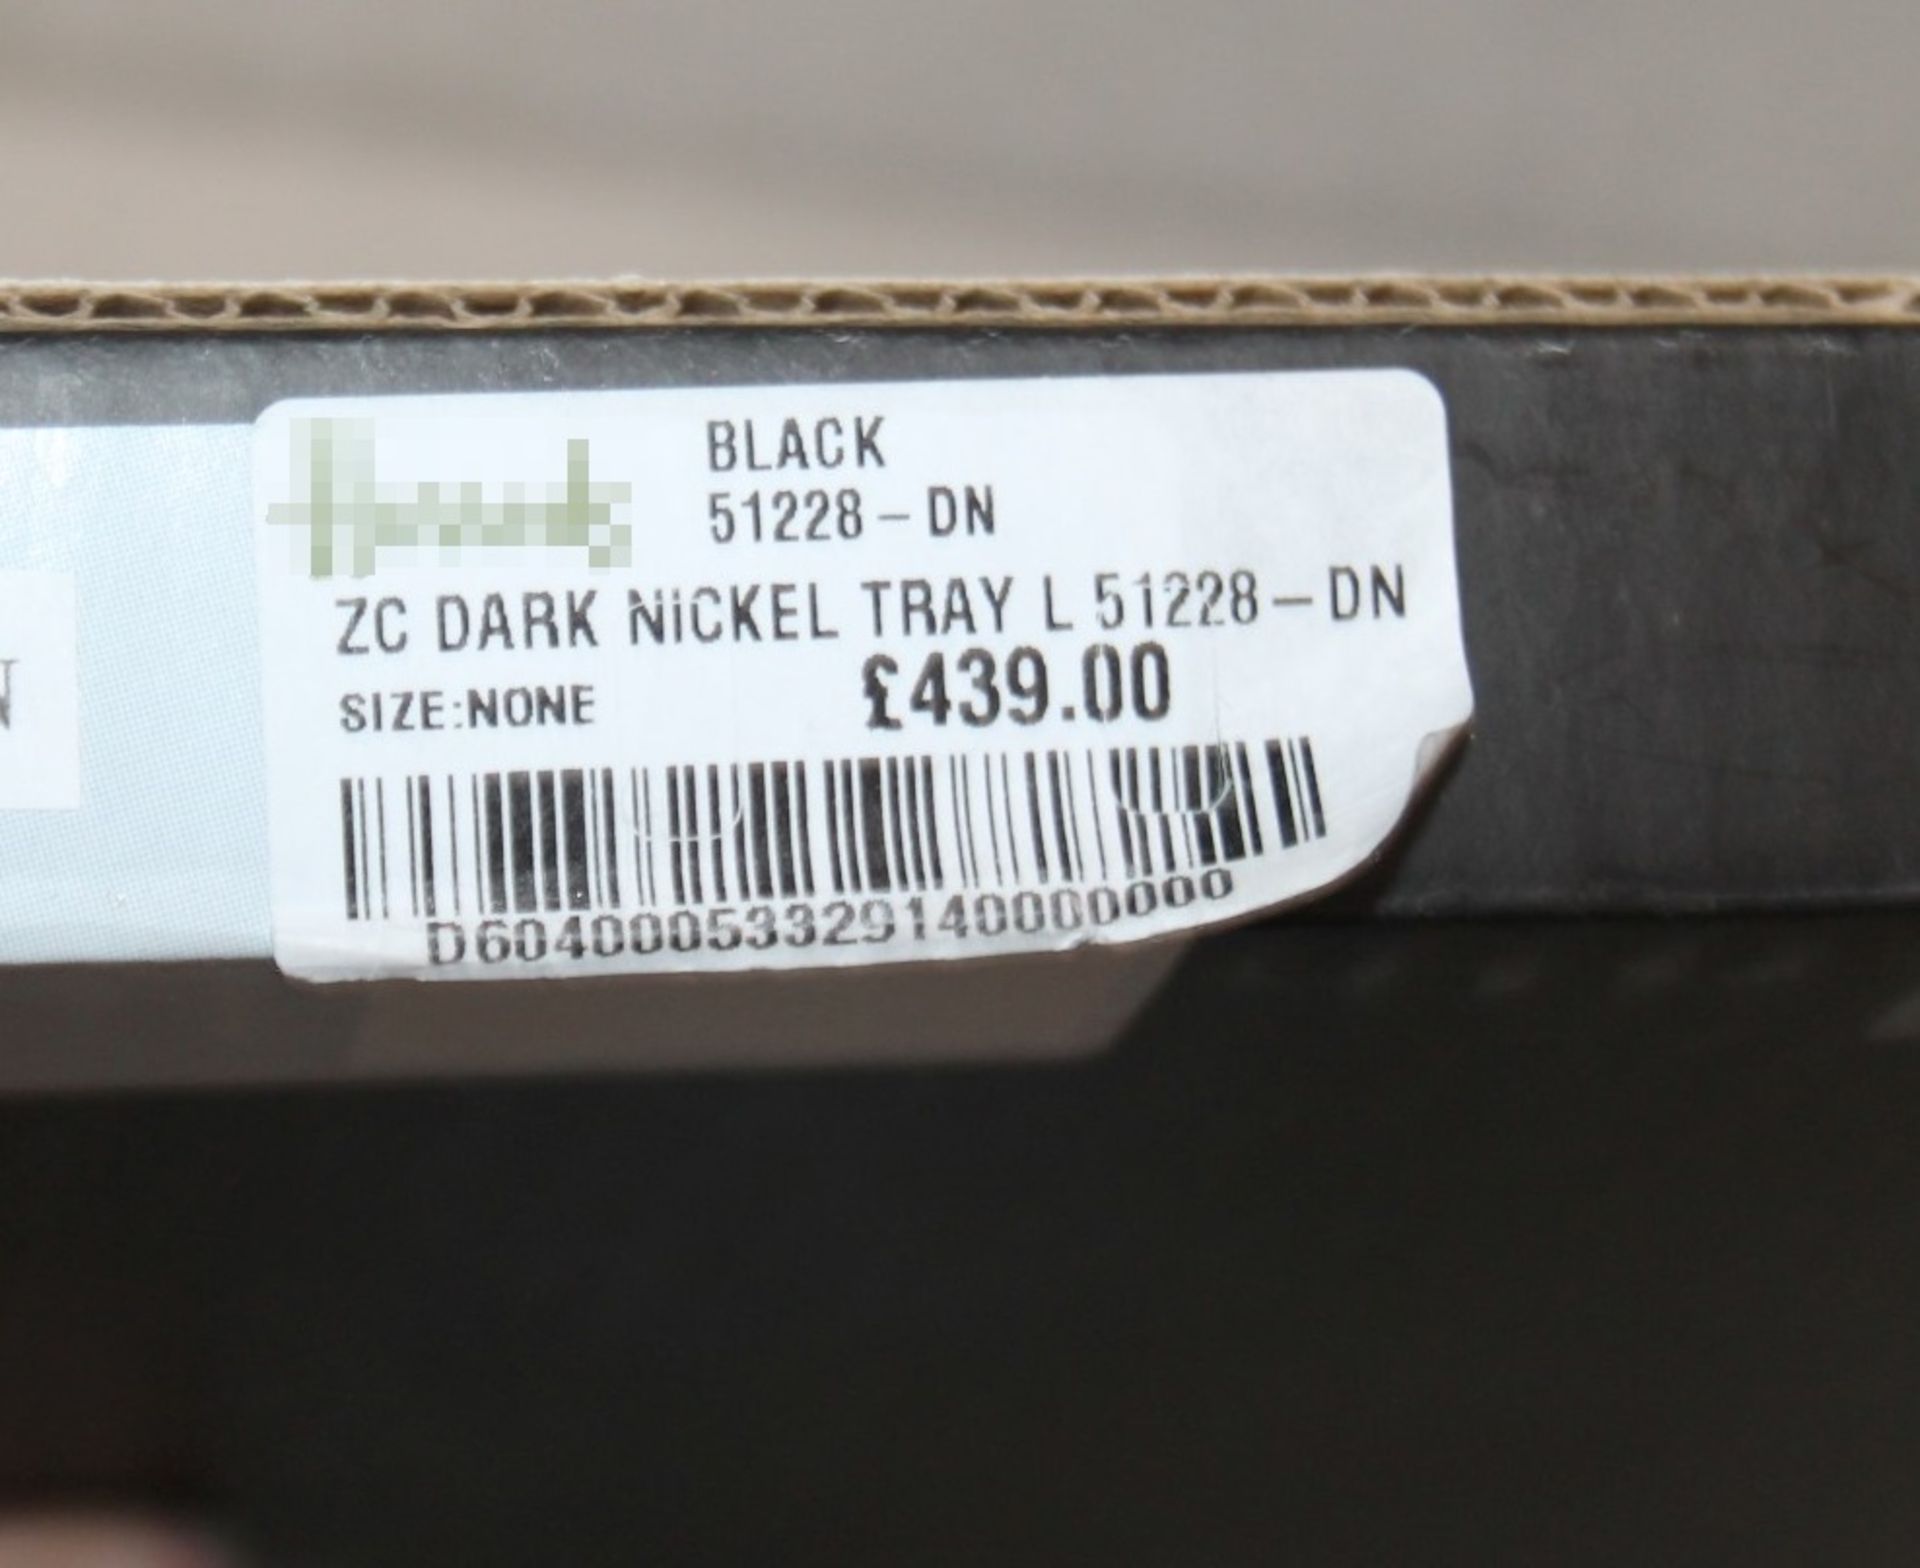 1 x ZODIAC Designer Tray With A Dark Nickel Finish - Original Price £439.00 - Ref: 5332914/HAS1171/ - Image 4 of 6